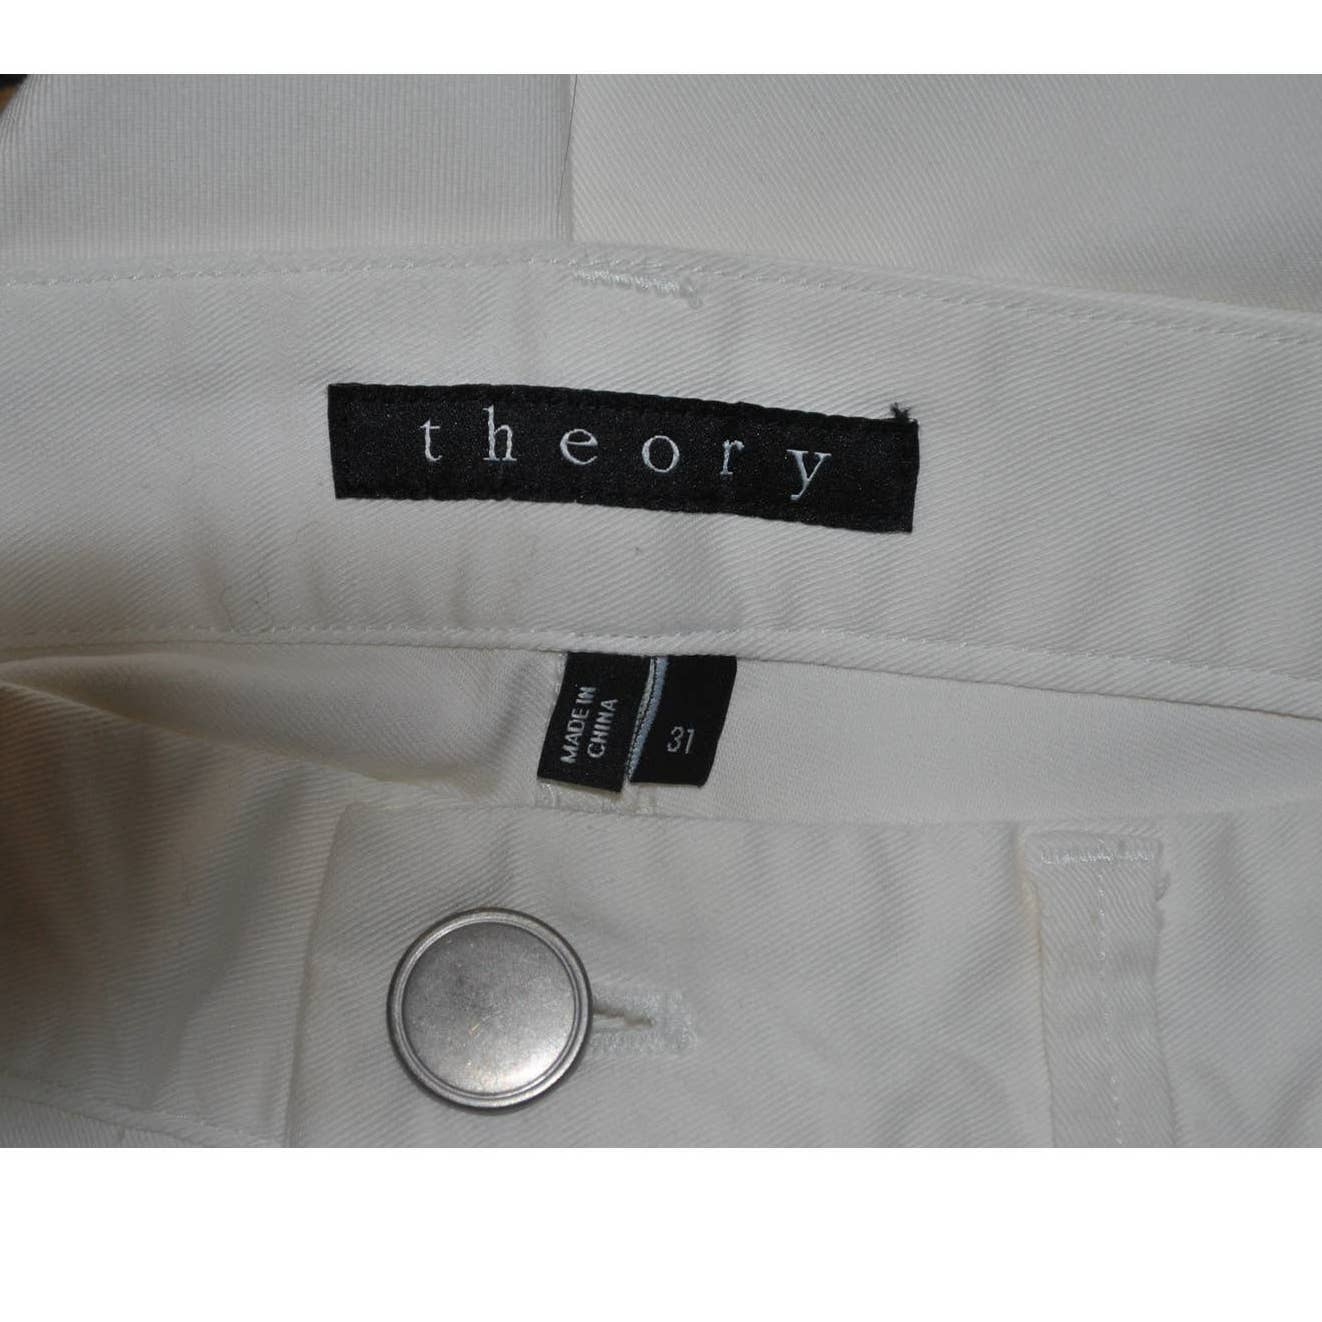 Theory White Denim 5 Pocket Jeans - 31